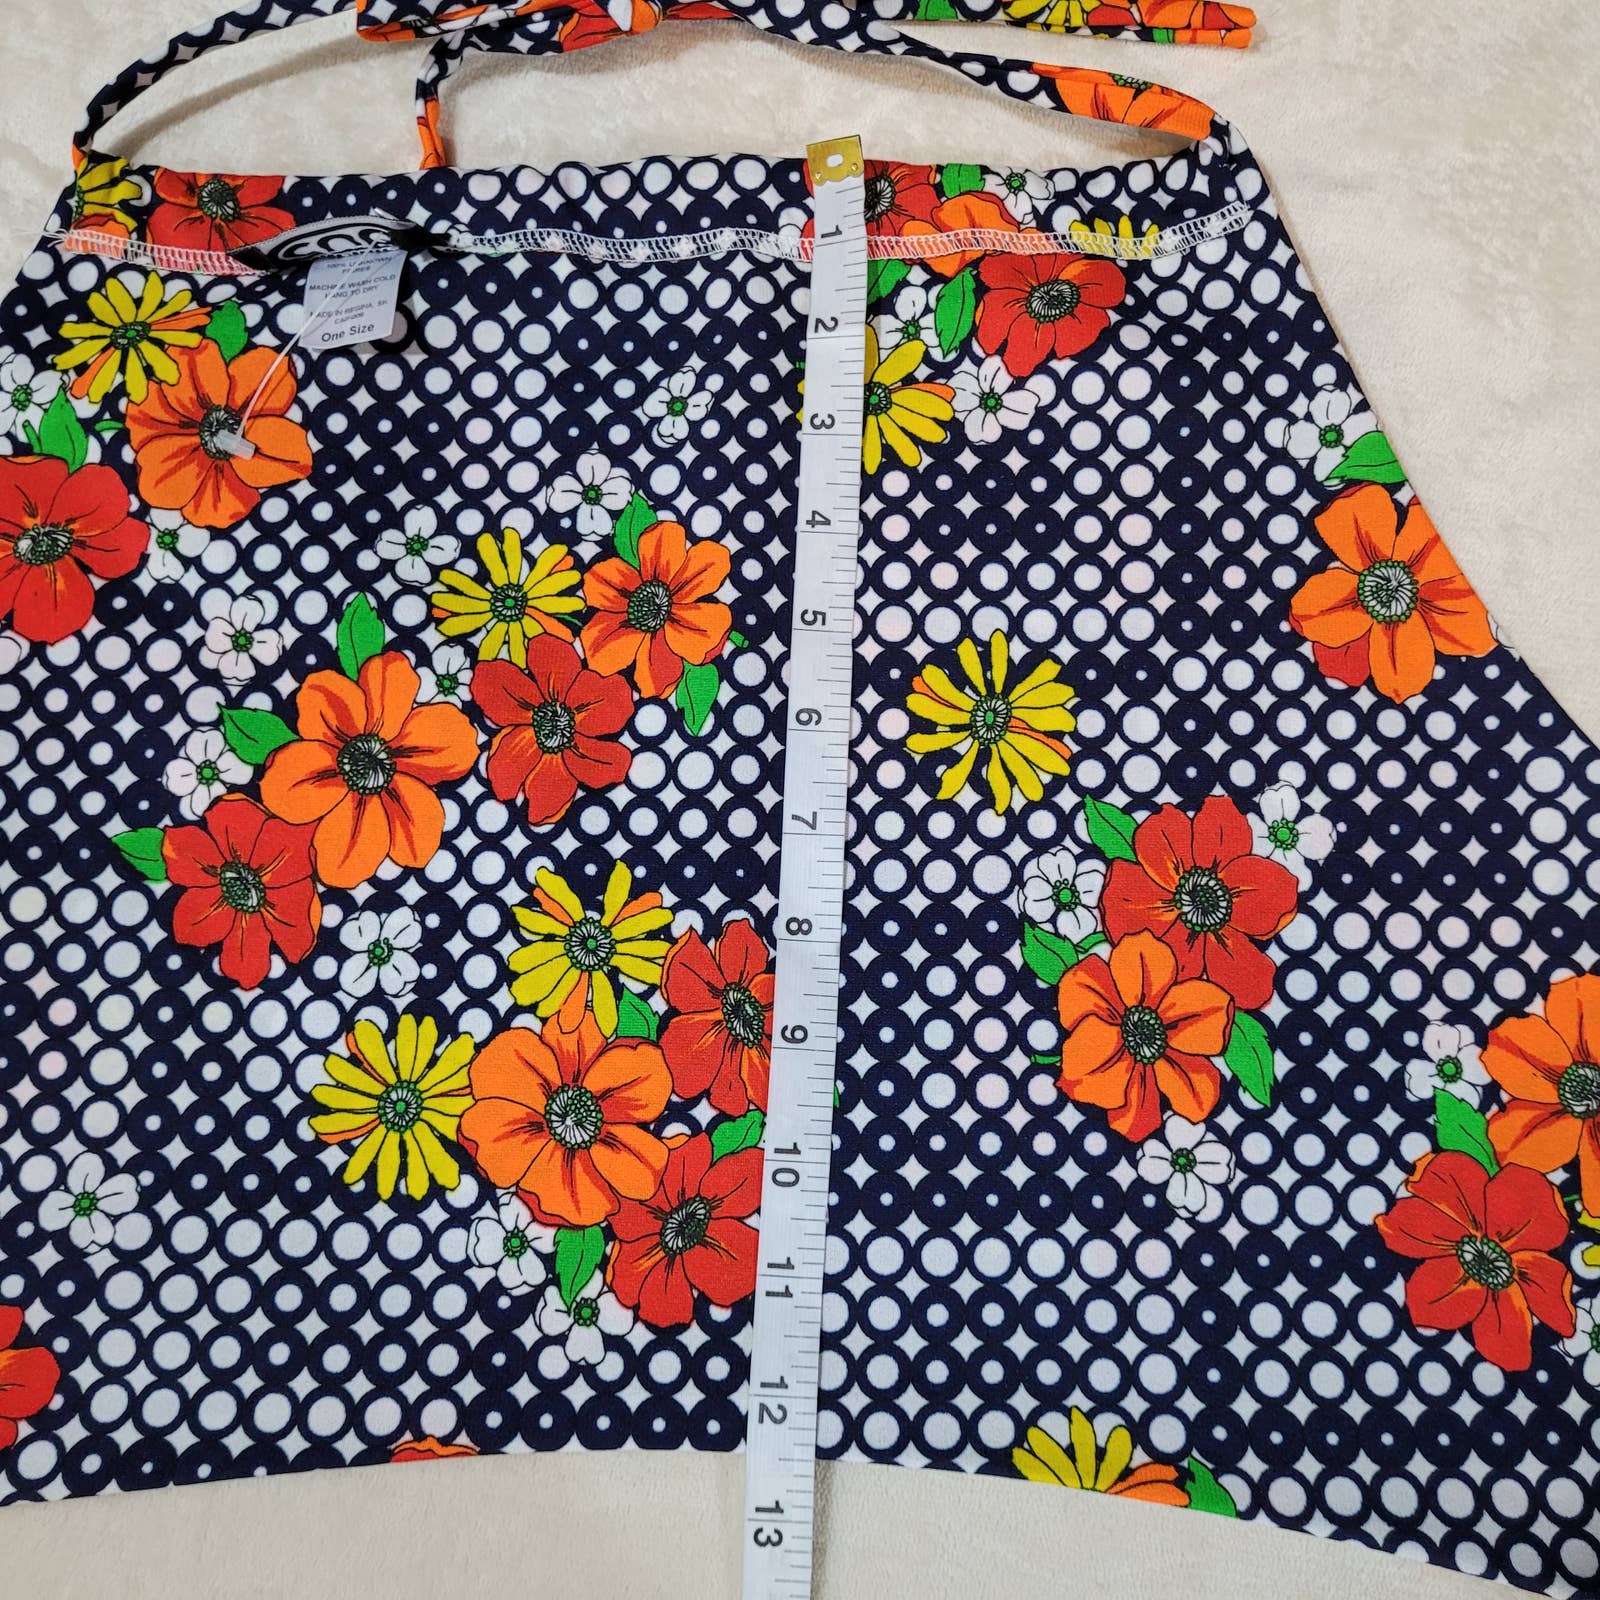 Cub Retro Y2K Floral Pattern Cropped Halter Top - One Size (XS-XL)Markita's ClosetCub